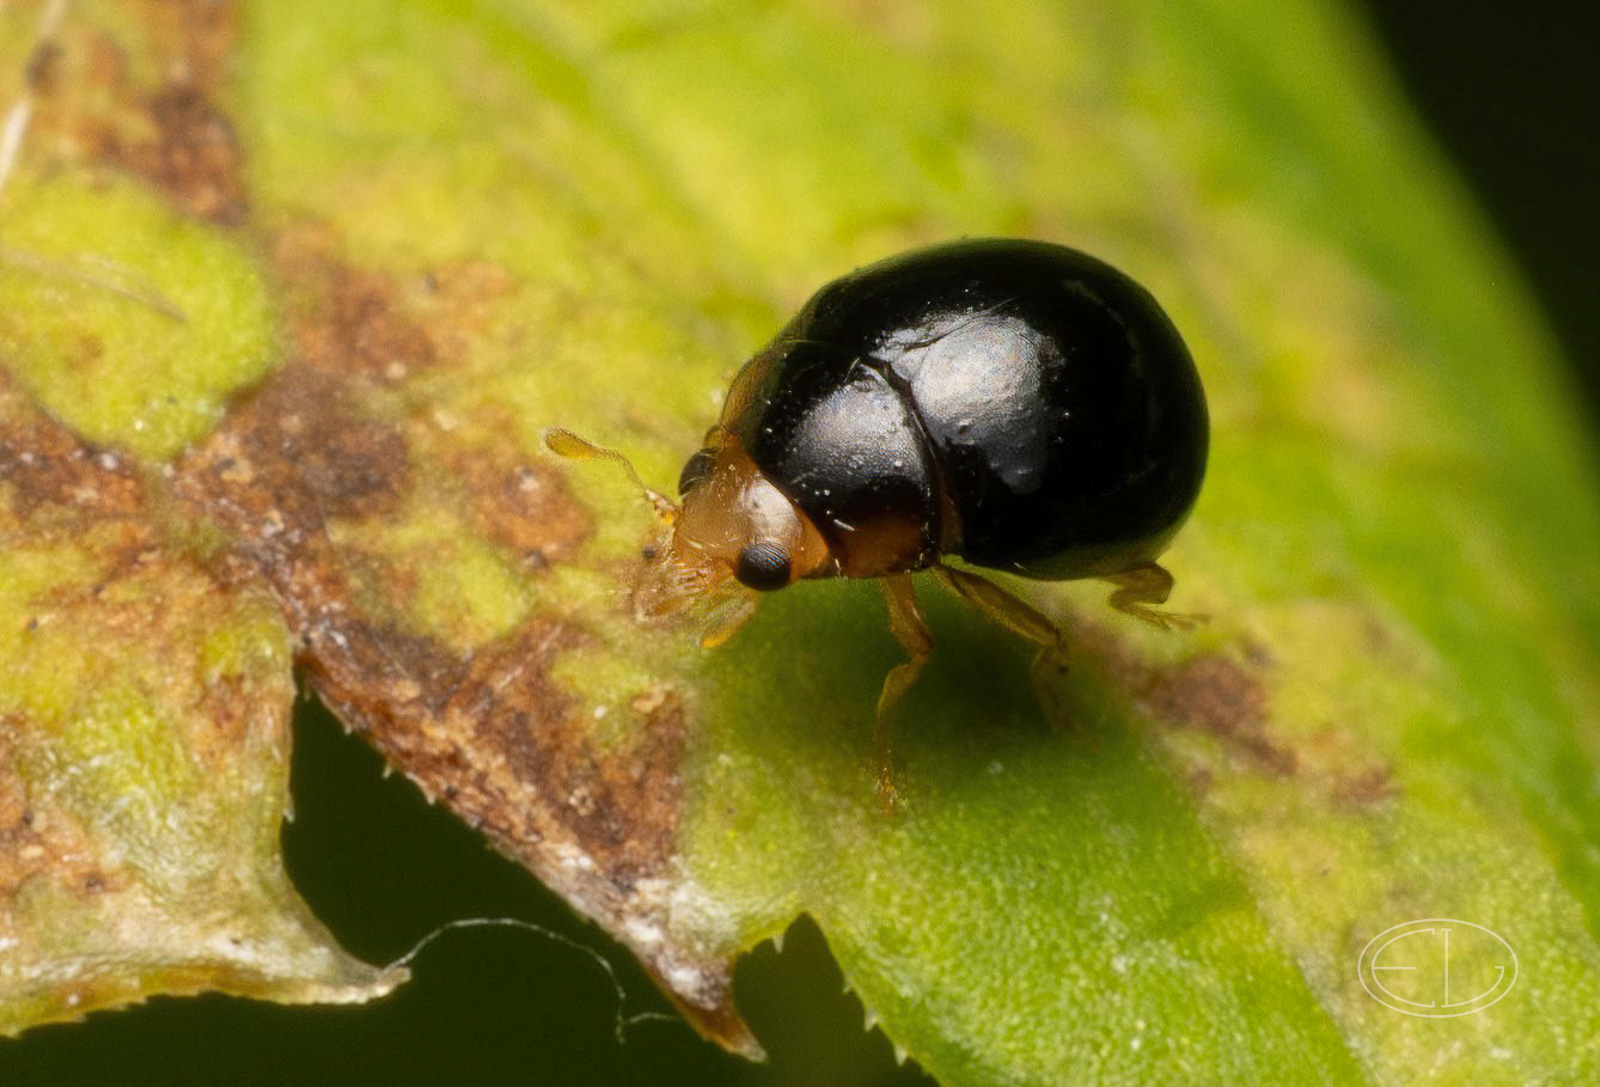 R7_D5366 Delphastus pusillus - tiny ladybug-Edit.jpg